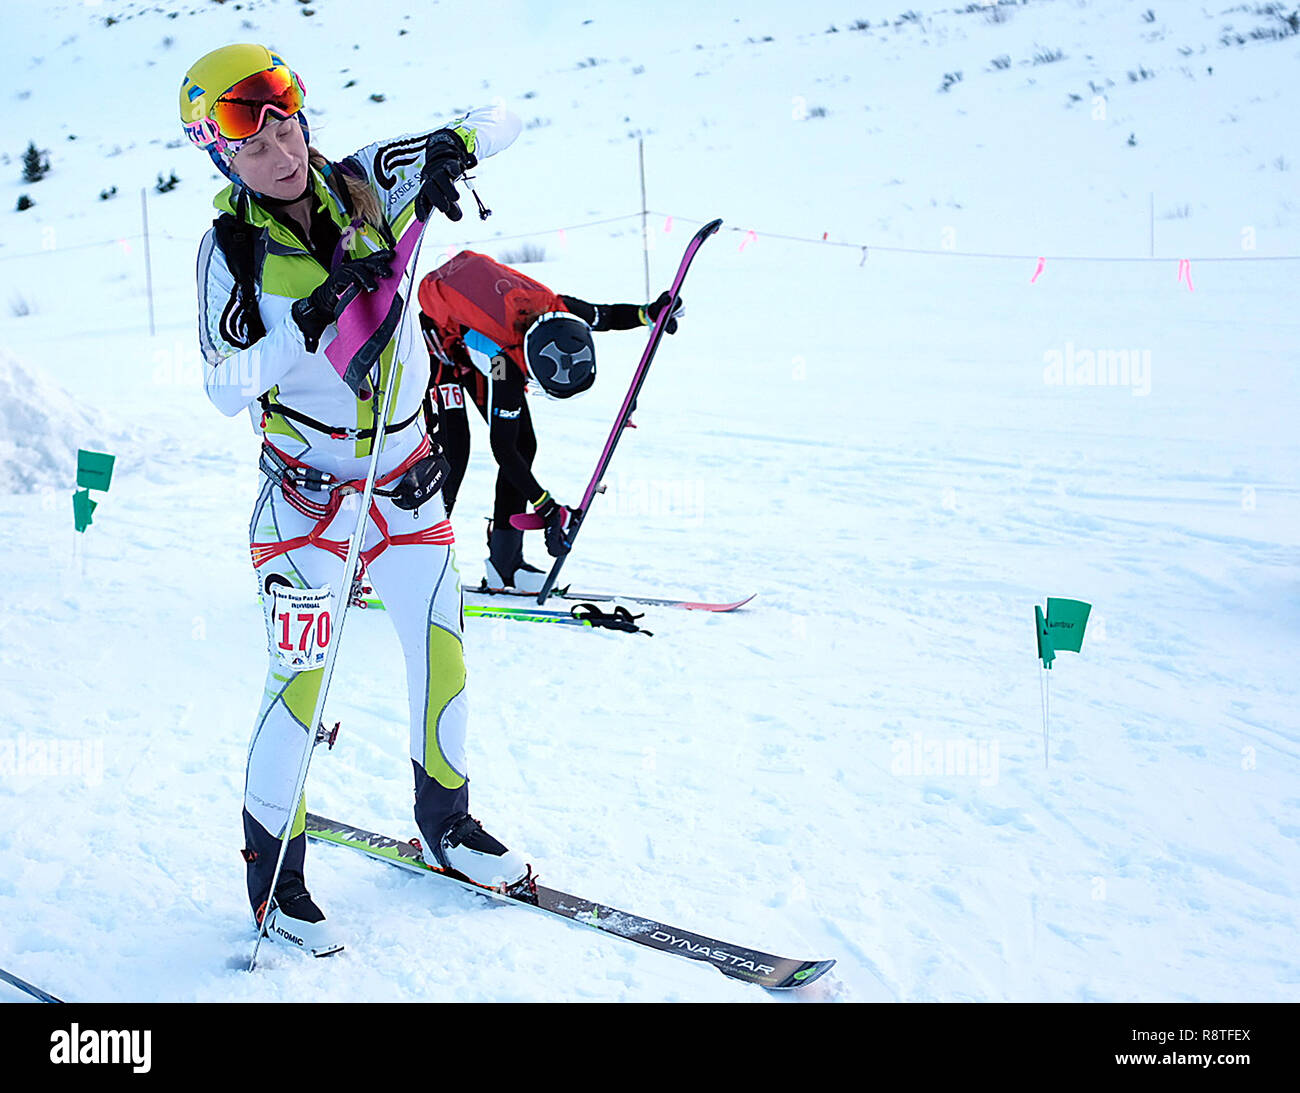 December 15, 2018: Women's ski mountaineering racer, Michela Adrian #130, applies climbing skins to her skis during the difficult United States Ski Mountaineering Association's Individual Race. Arapahoe Basin Ski Area, Dillon, Colorado. Stock Photo